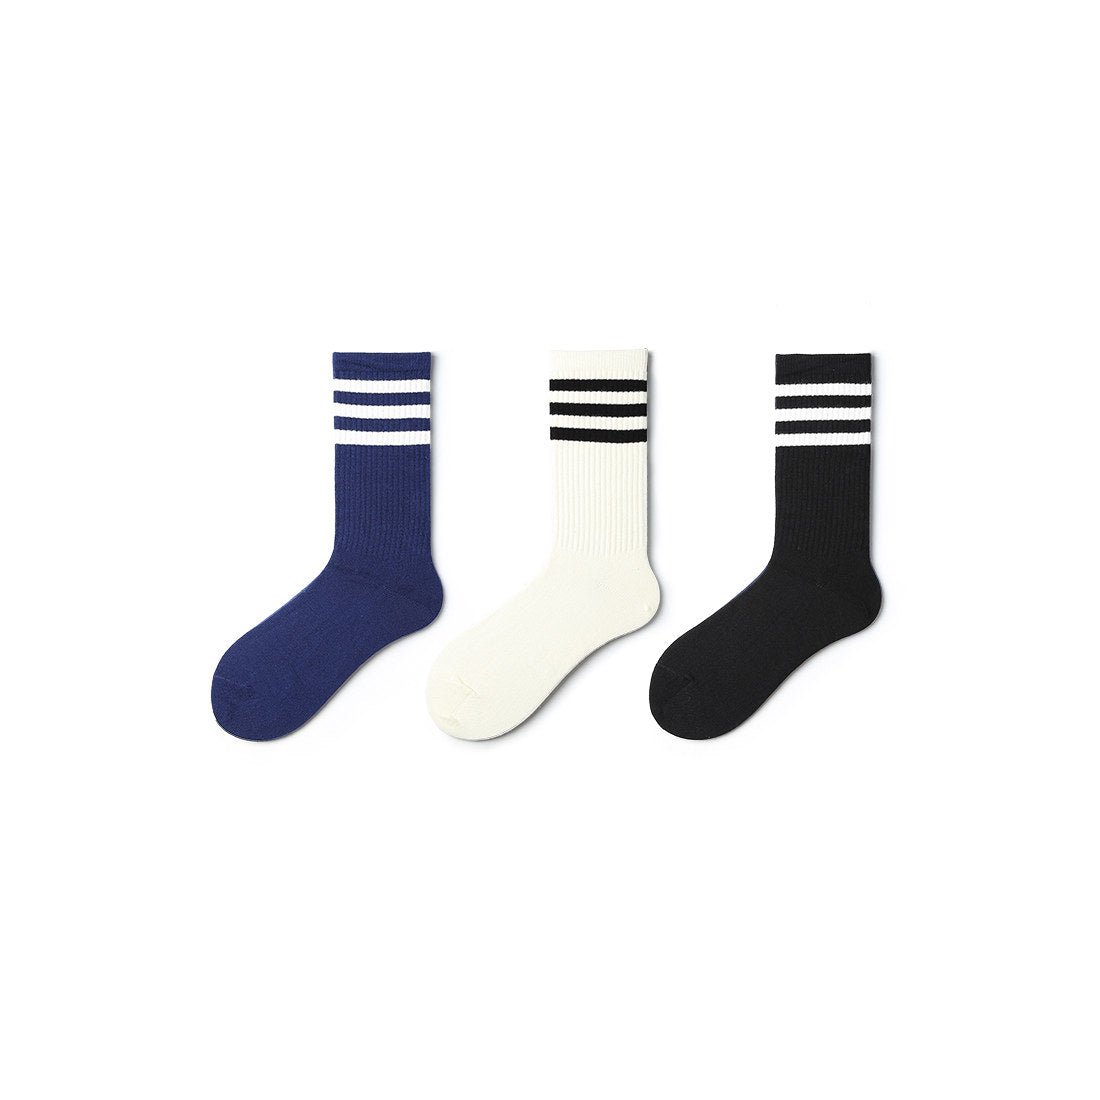 Three Stripes All-season Men 3pcs Sport Over-calf Socks Set